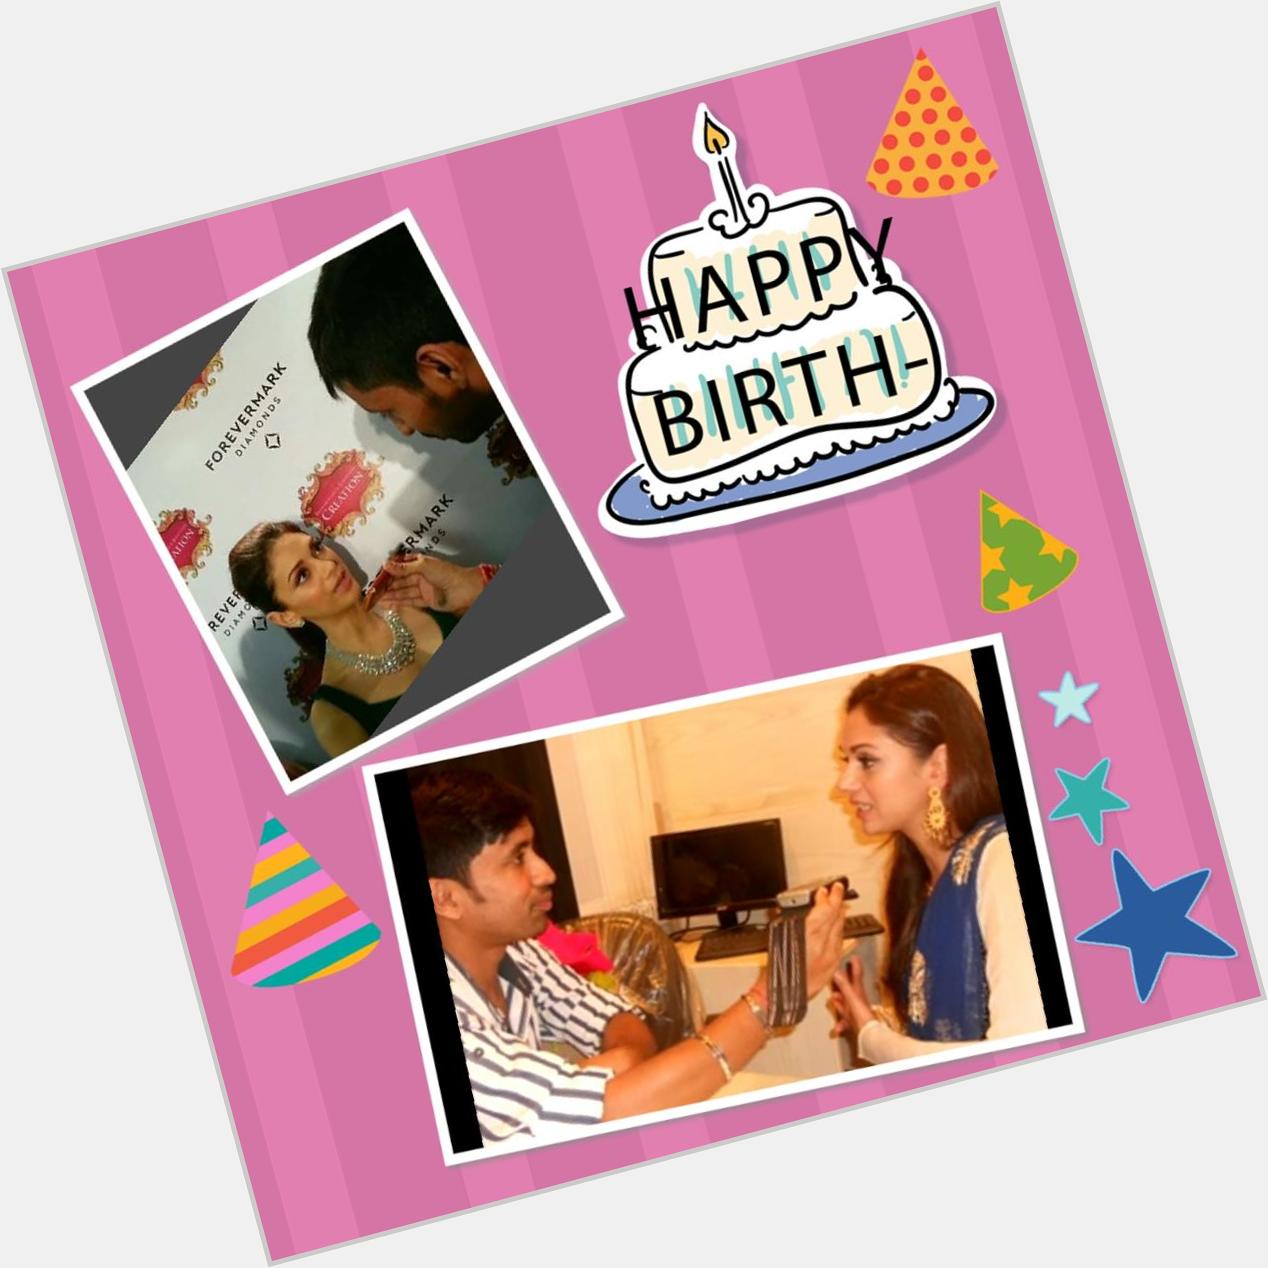  Wishing Happy Birthday to Actress Aditi Rao Hydari .  